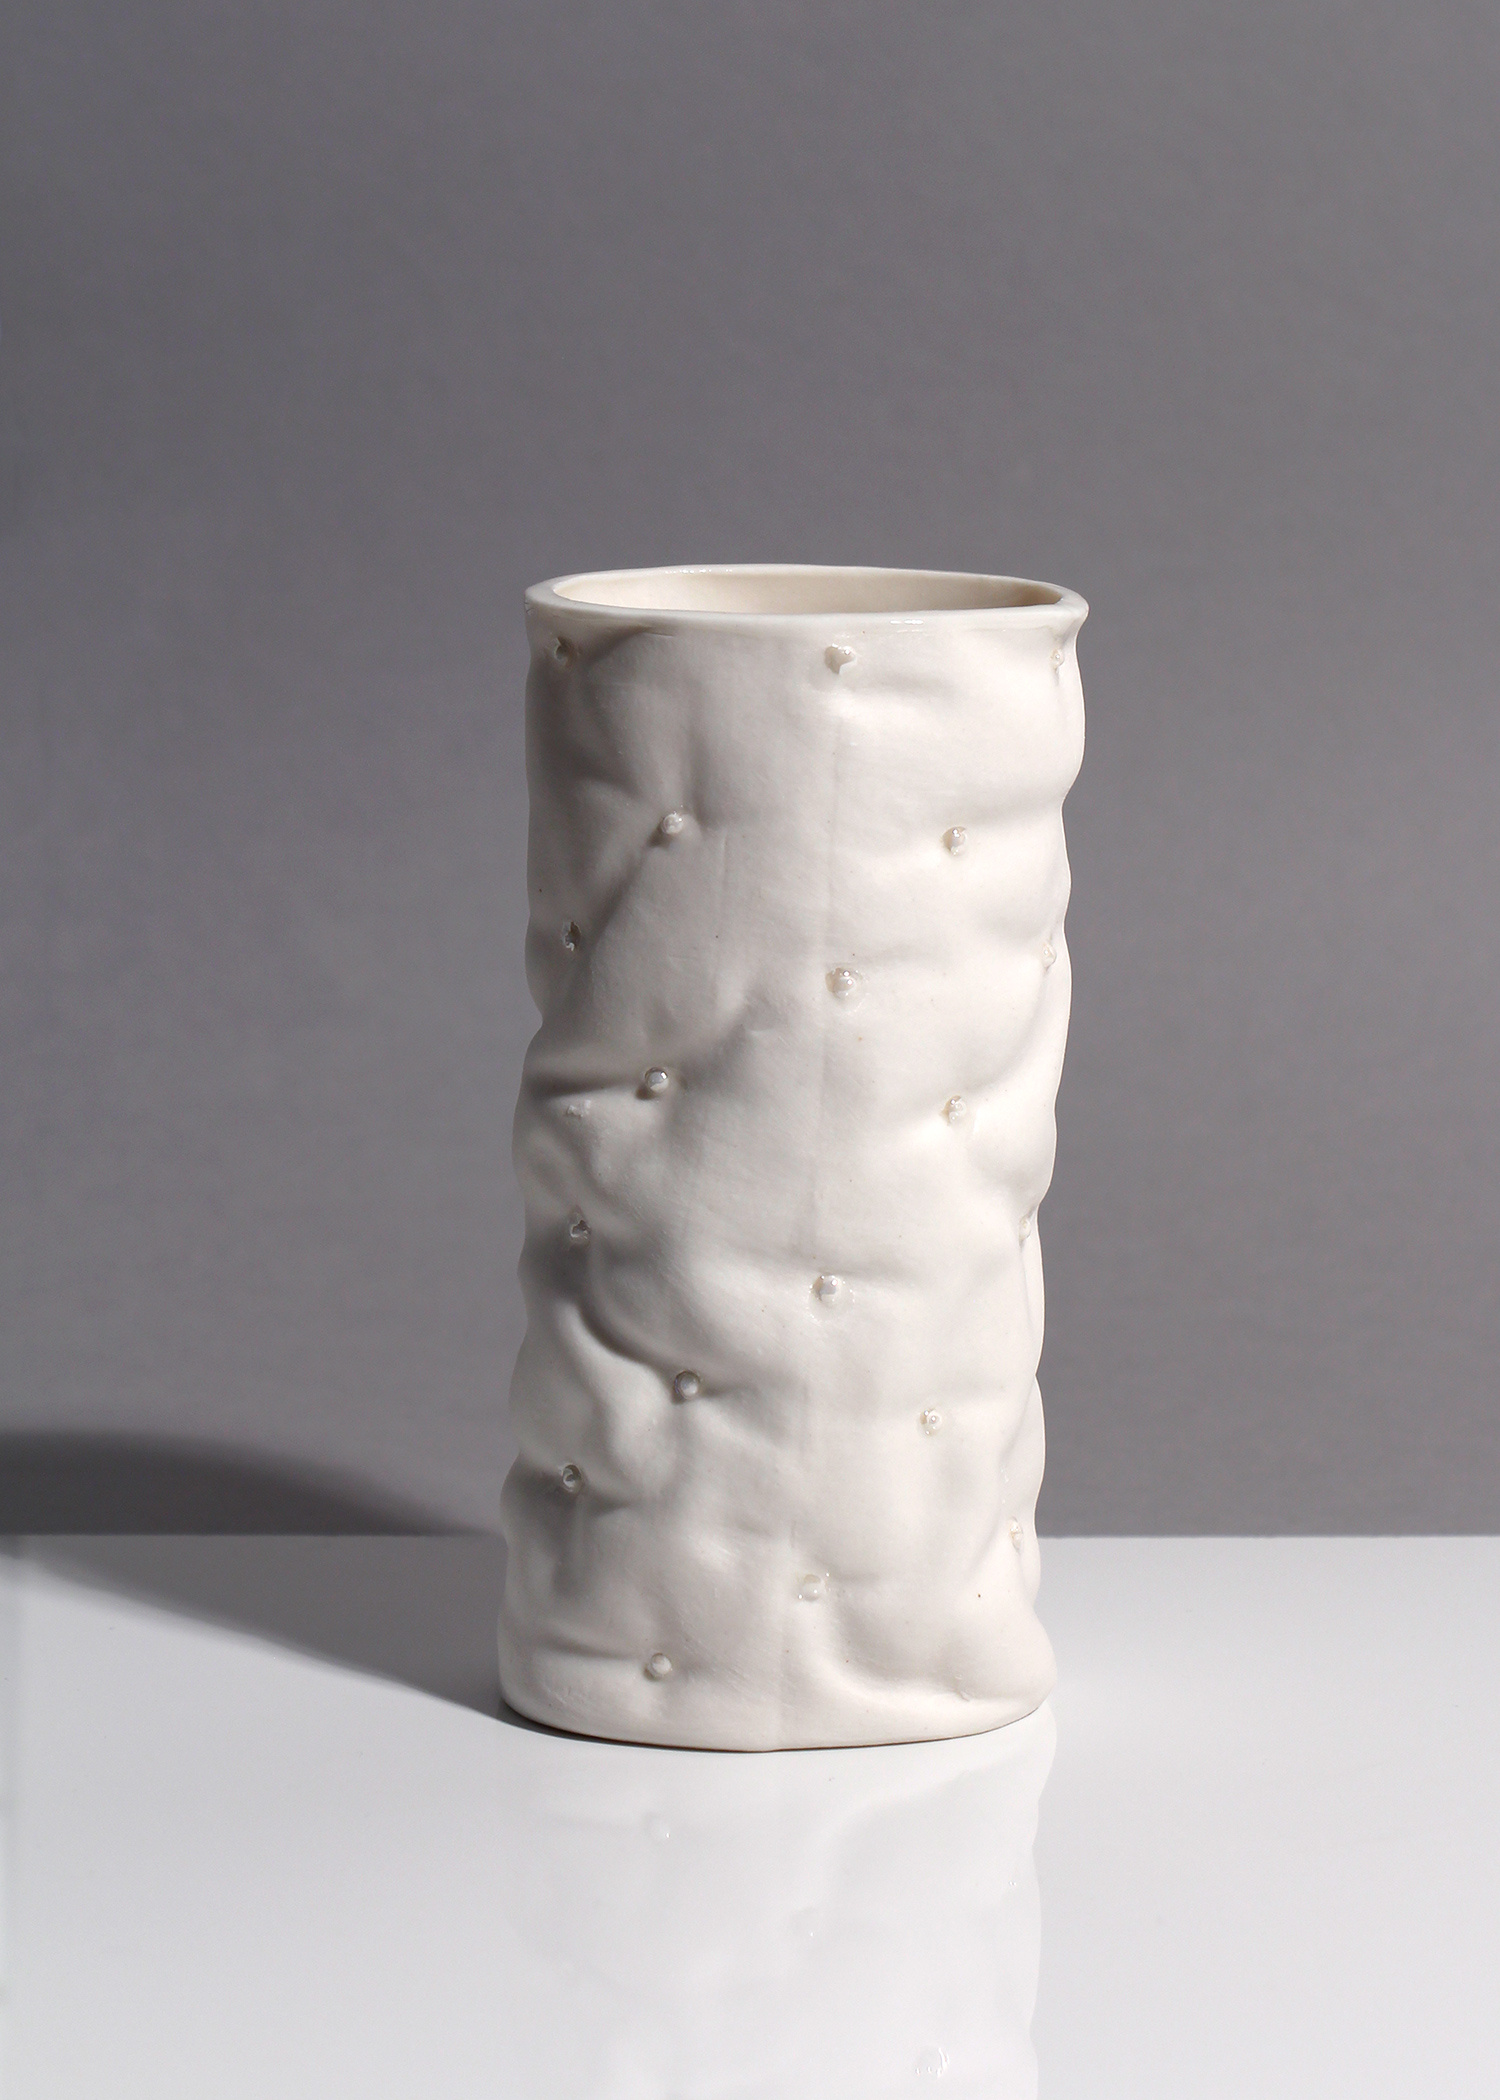 Tight Padding Oval Vase by Sarah Grove